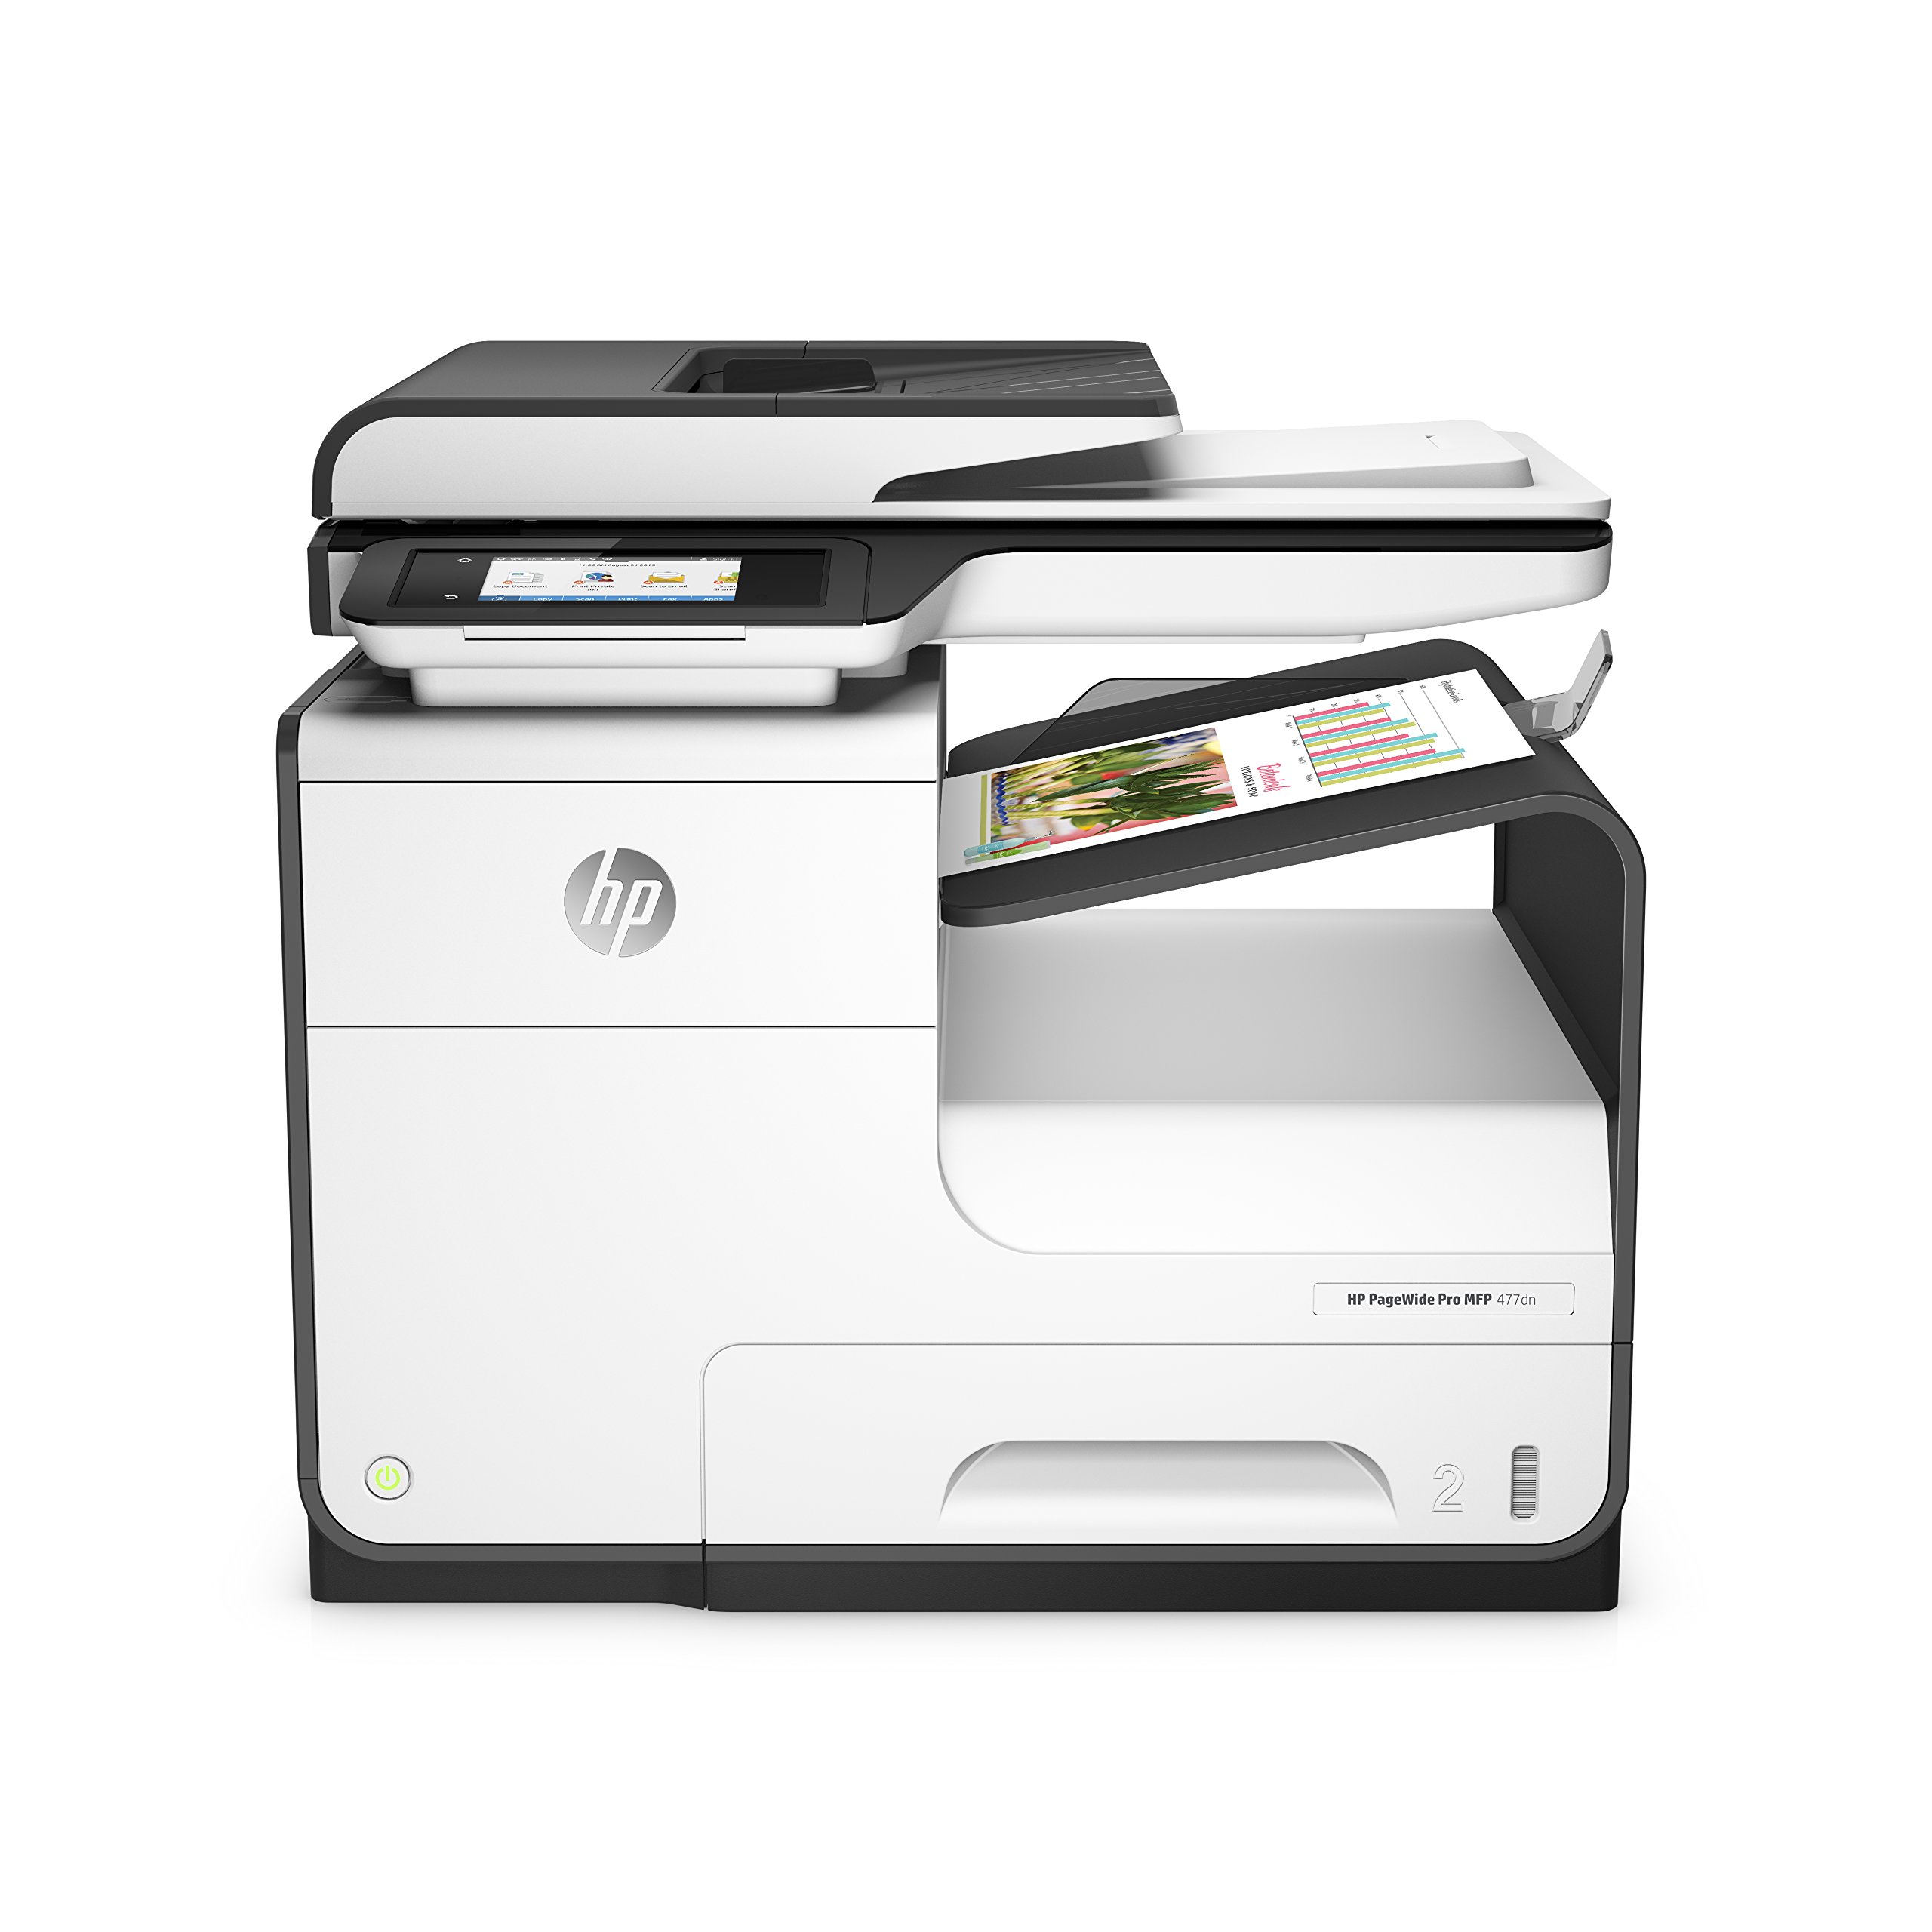 PageWide Pro 477dn Multifunction Printer series